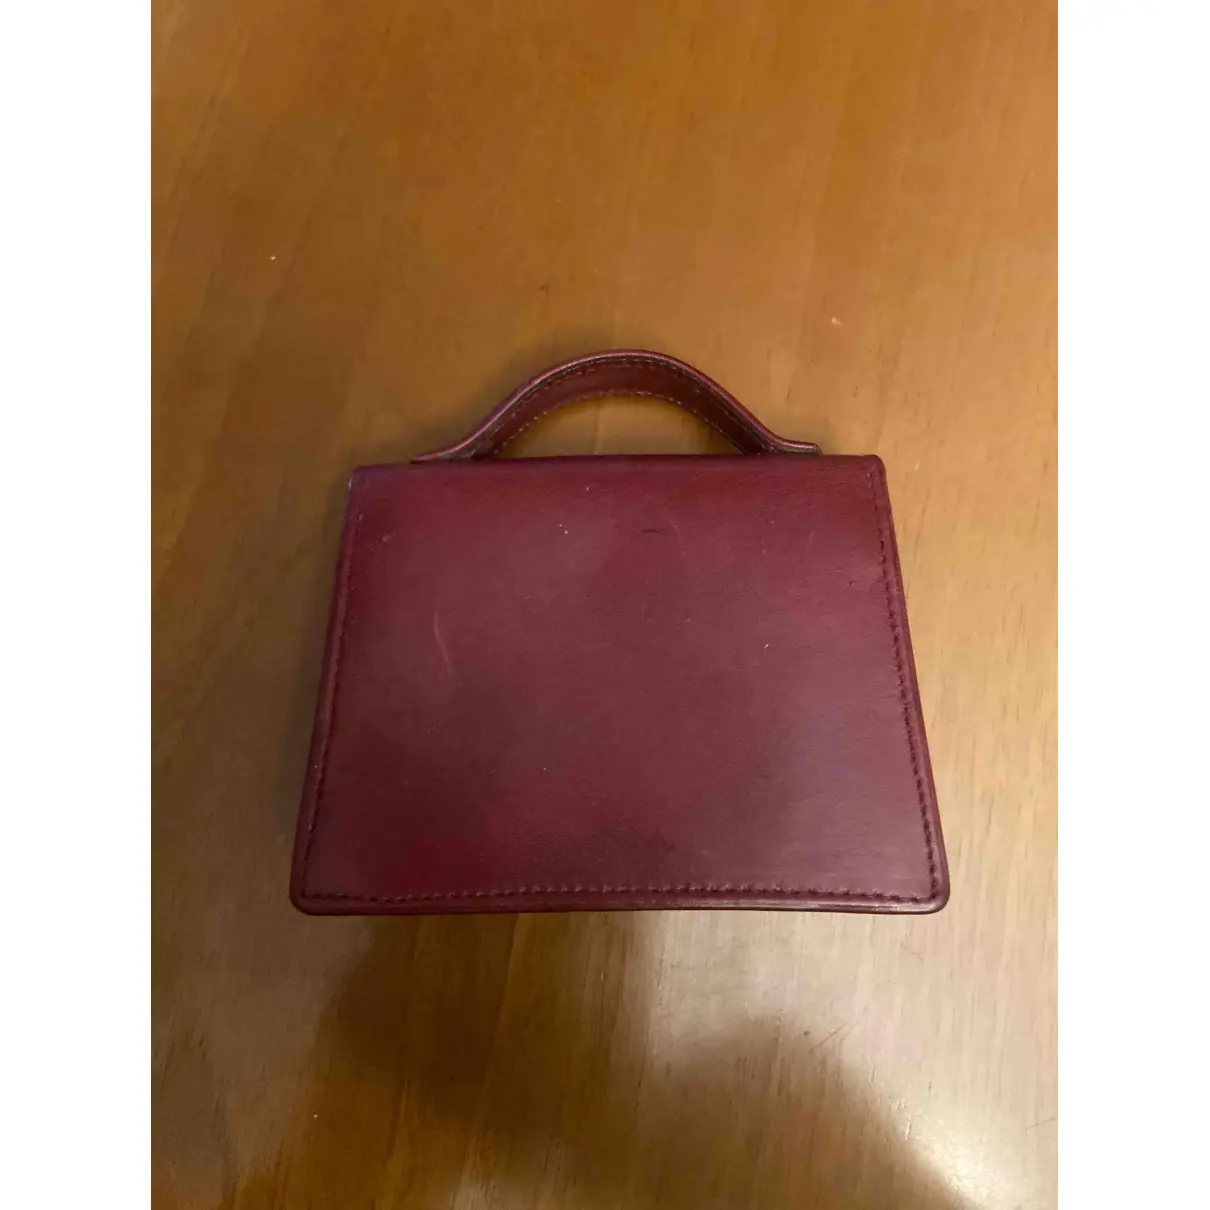 Celine Leather purse for sale - Vintage